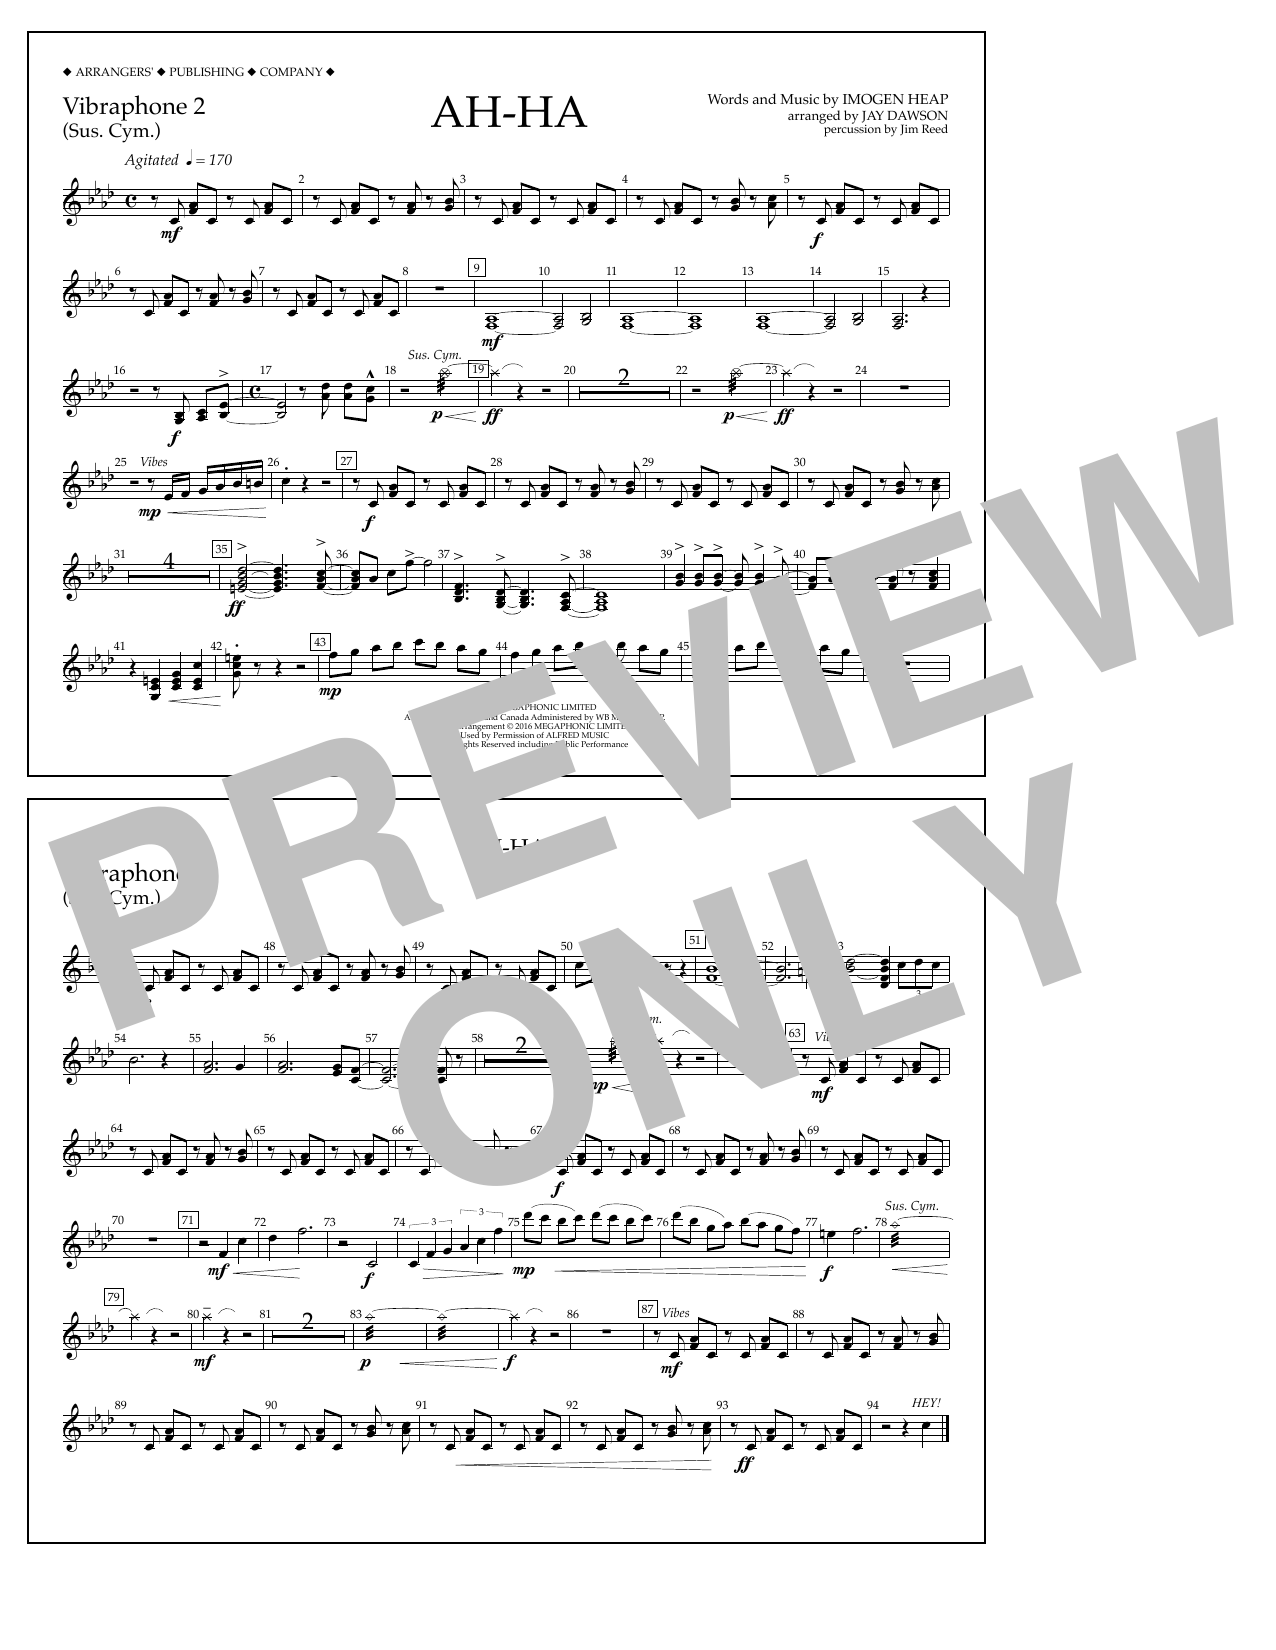 Jay Dawson Ah-ha - Vibraphone 2 Sheet Music Notes & Chords for Marching Band - Download or Print PDF